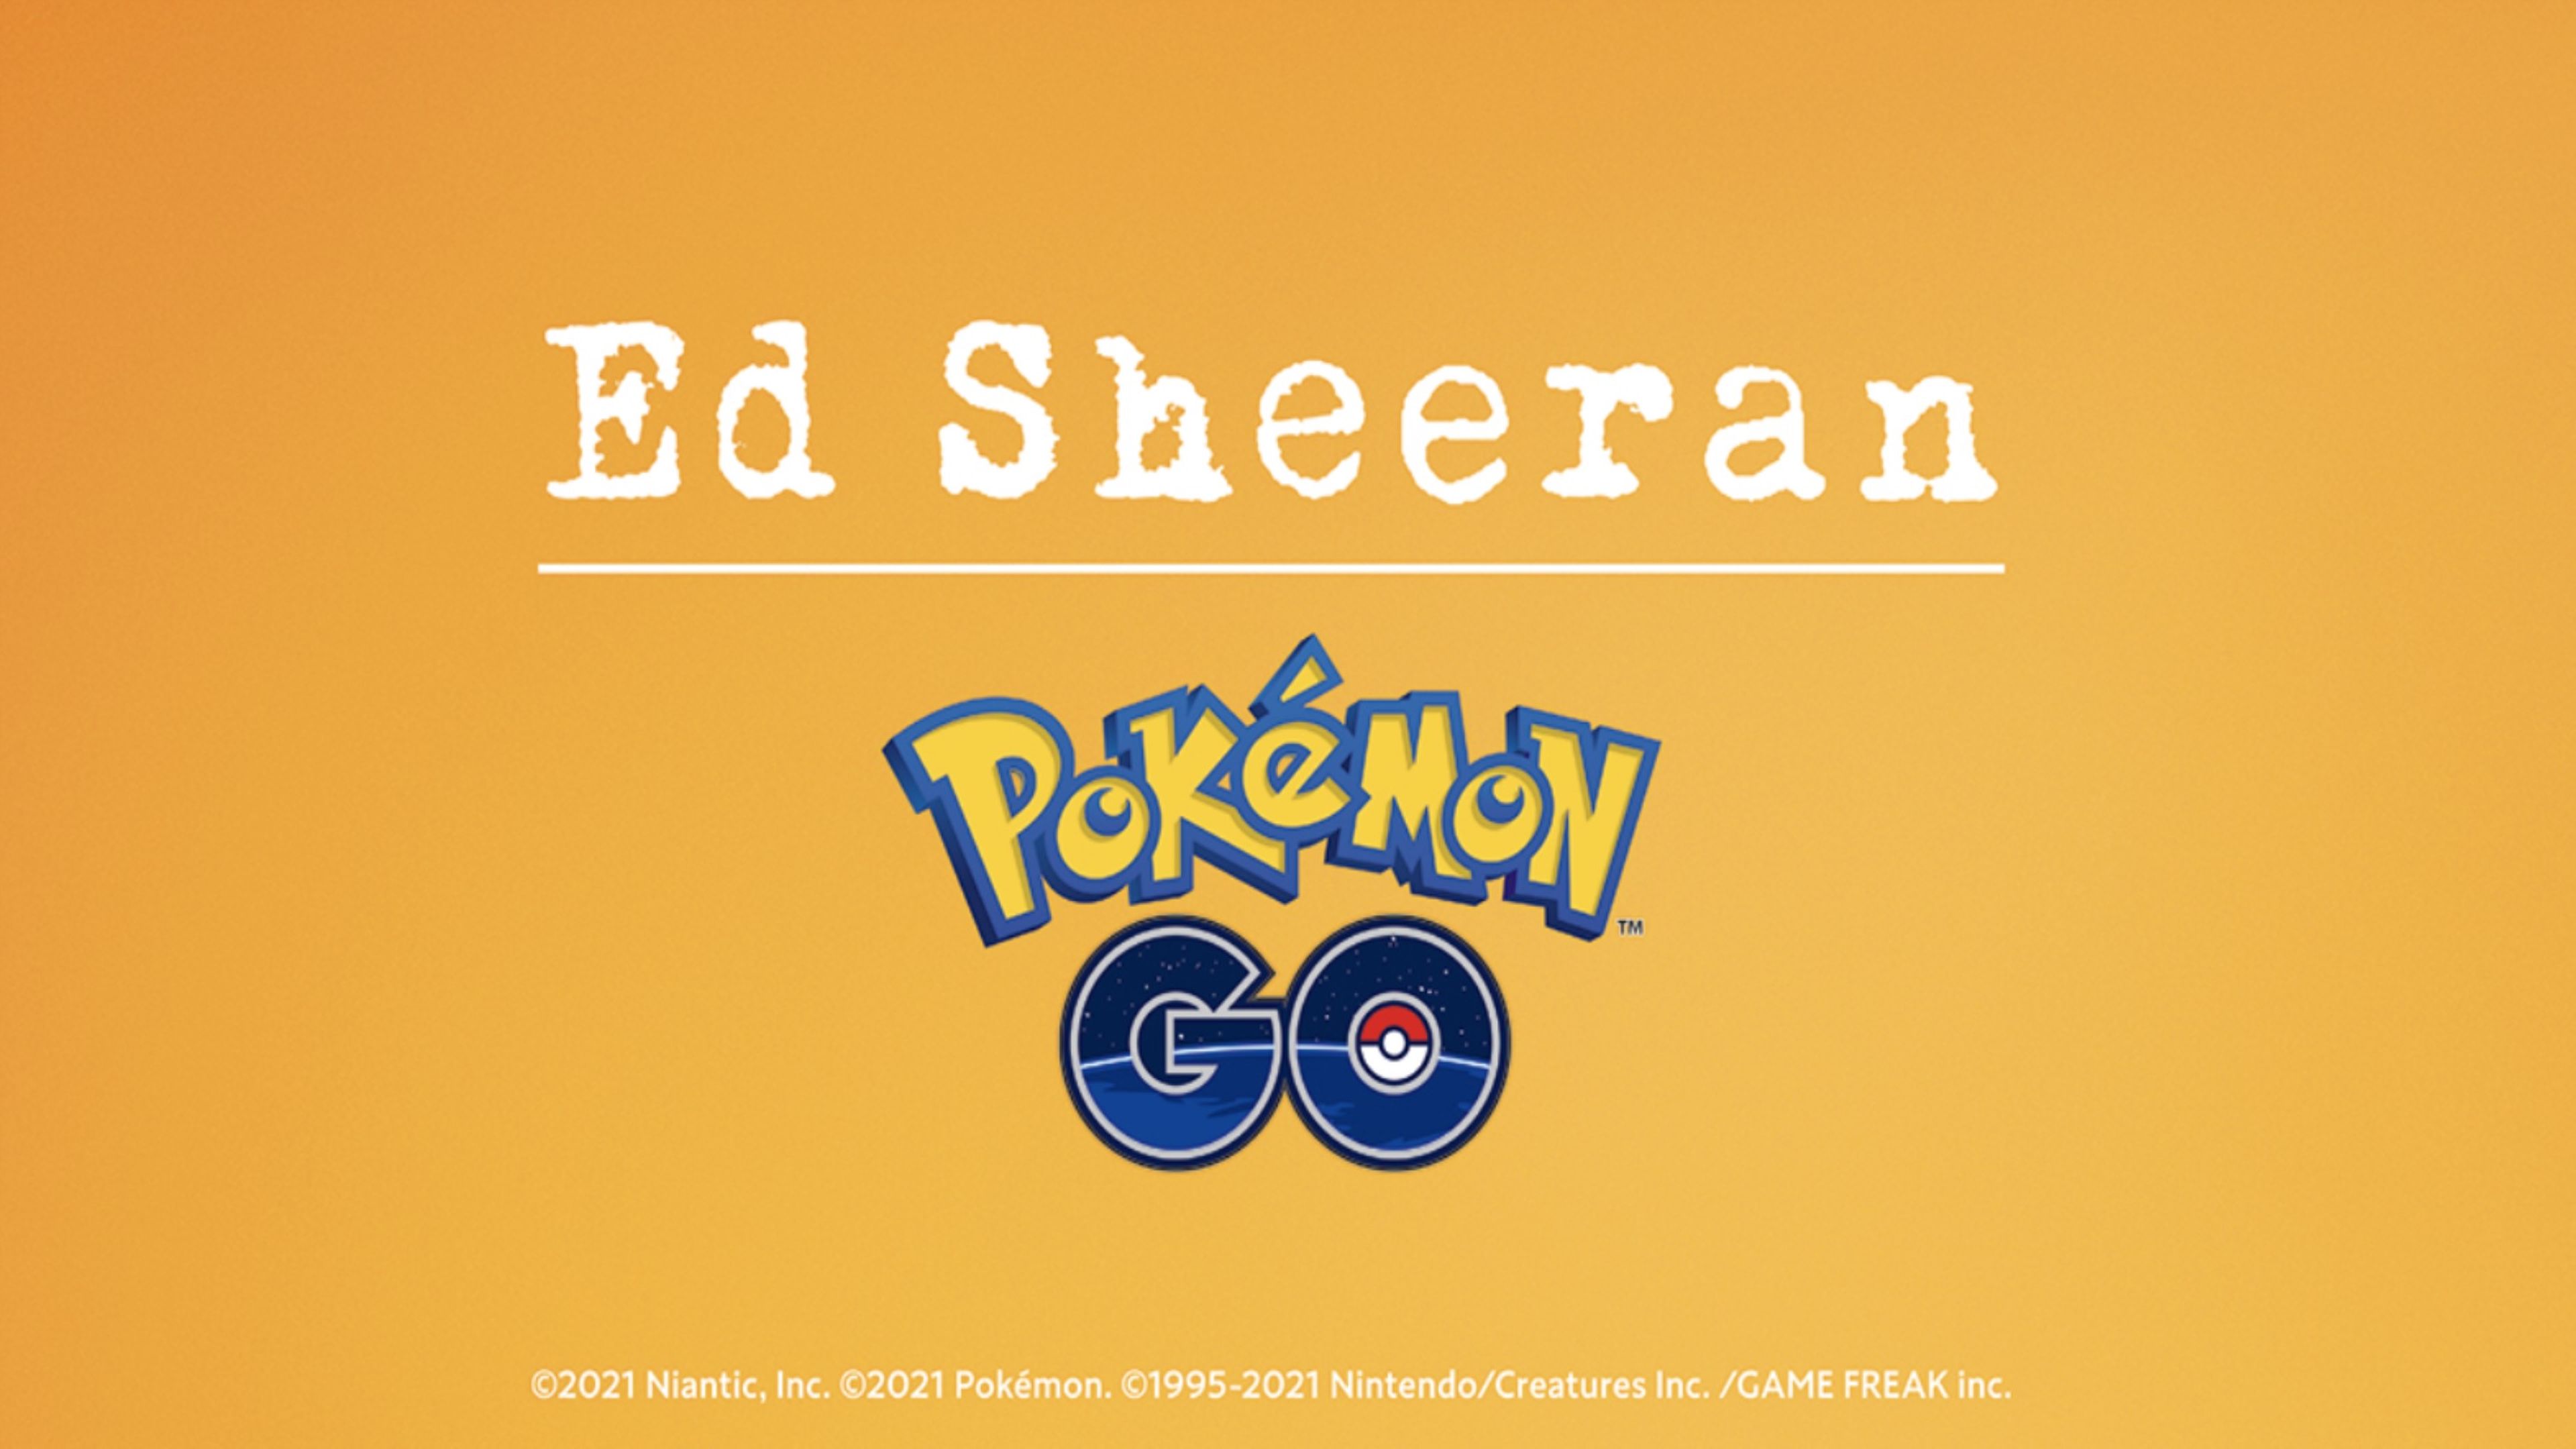 Pokémon Go x Ed Sheeran